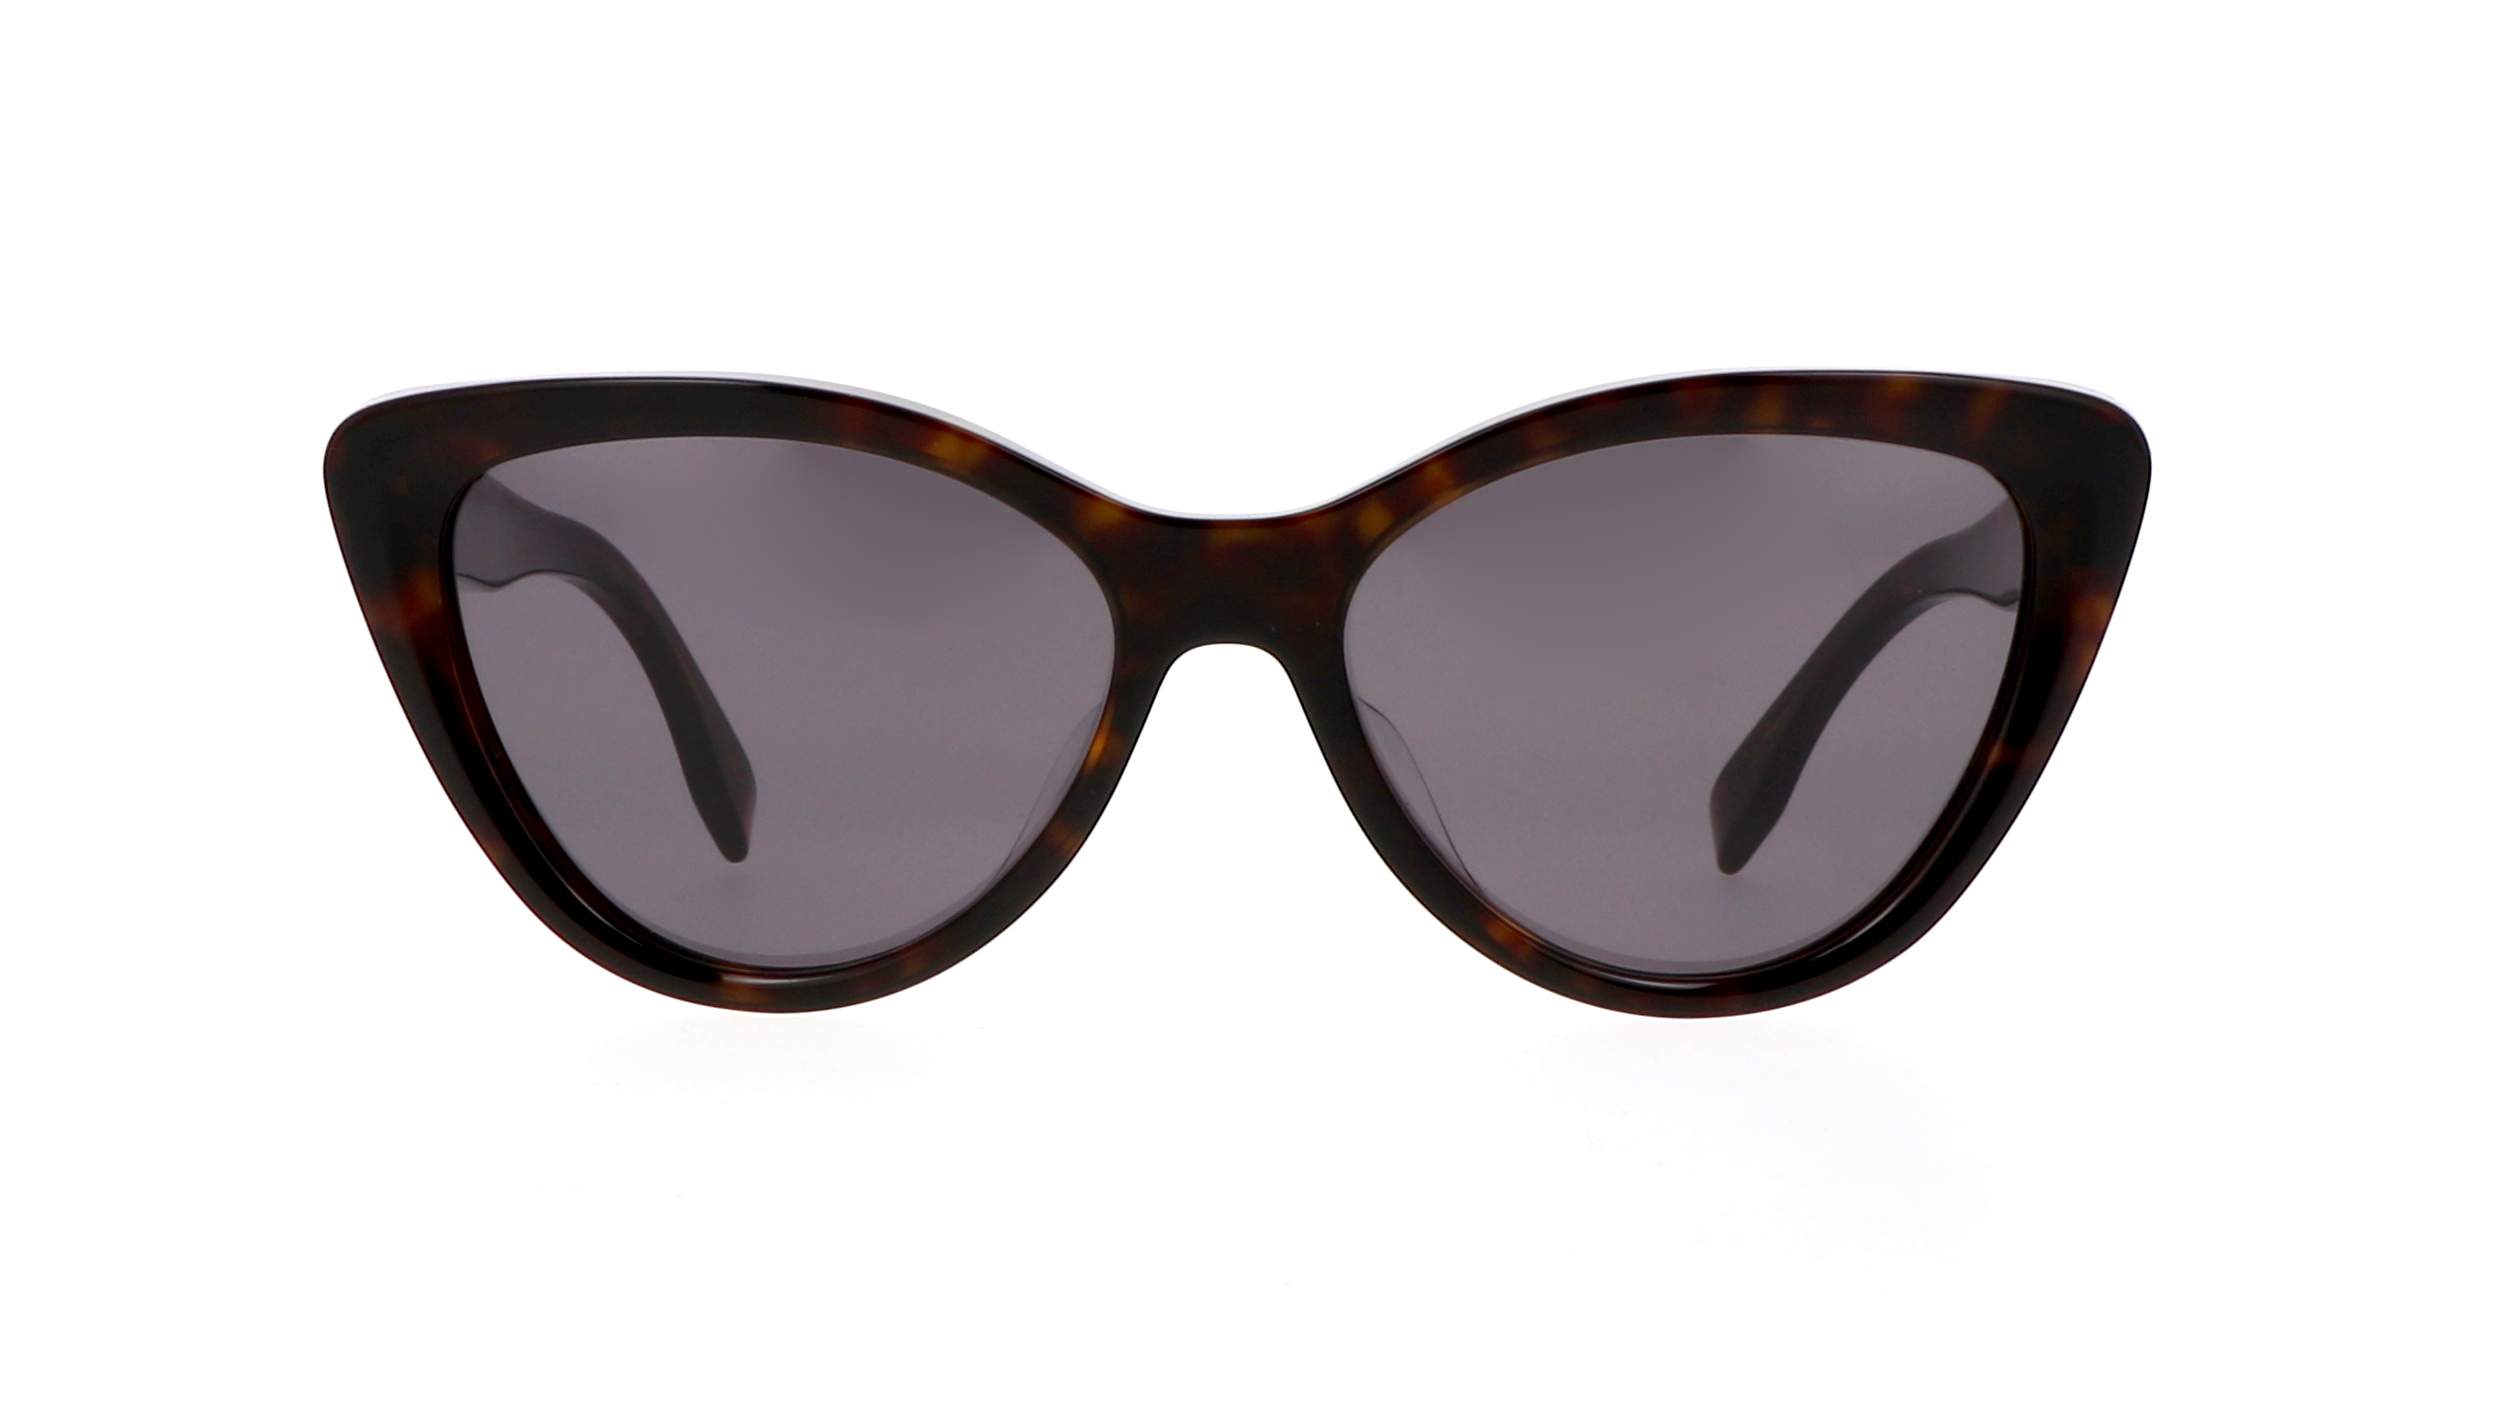 Sunglasses FENDI FE40087U 52A 55-16 Tortoise in stock | Price 187,92 ...